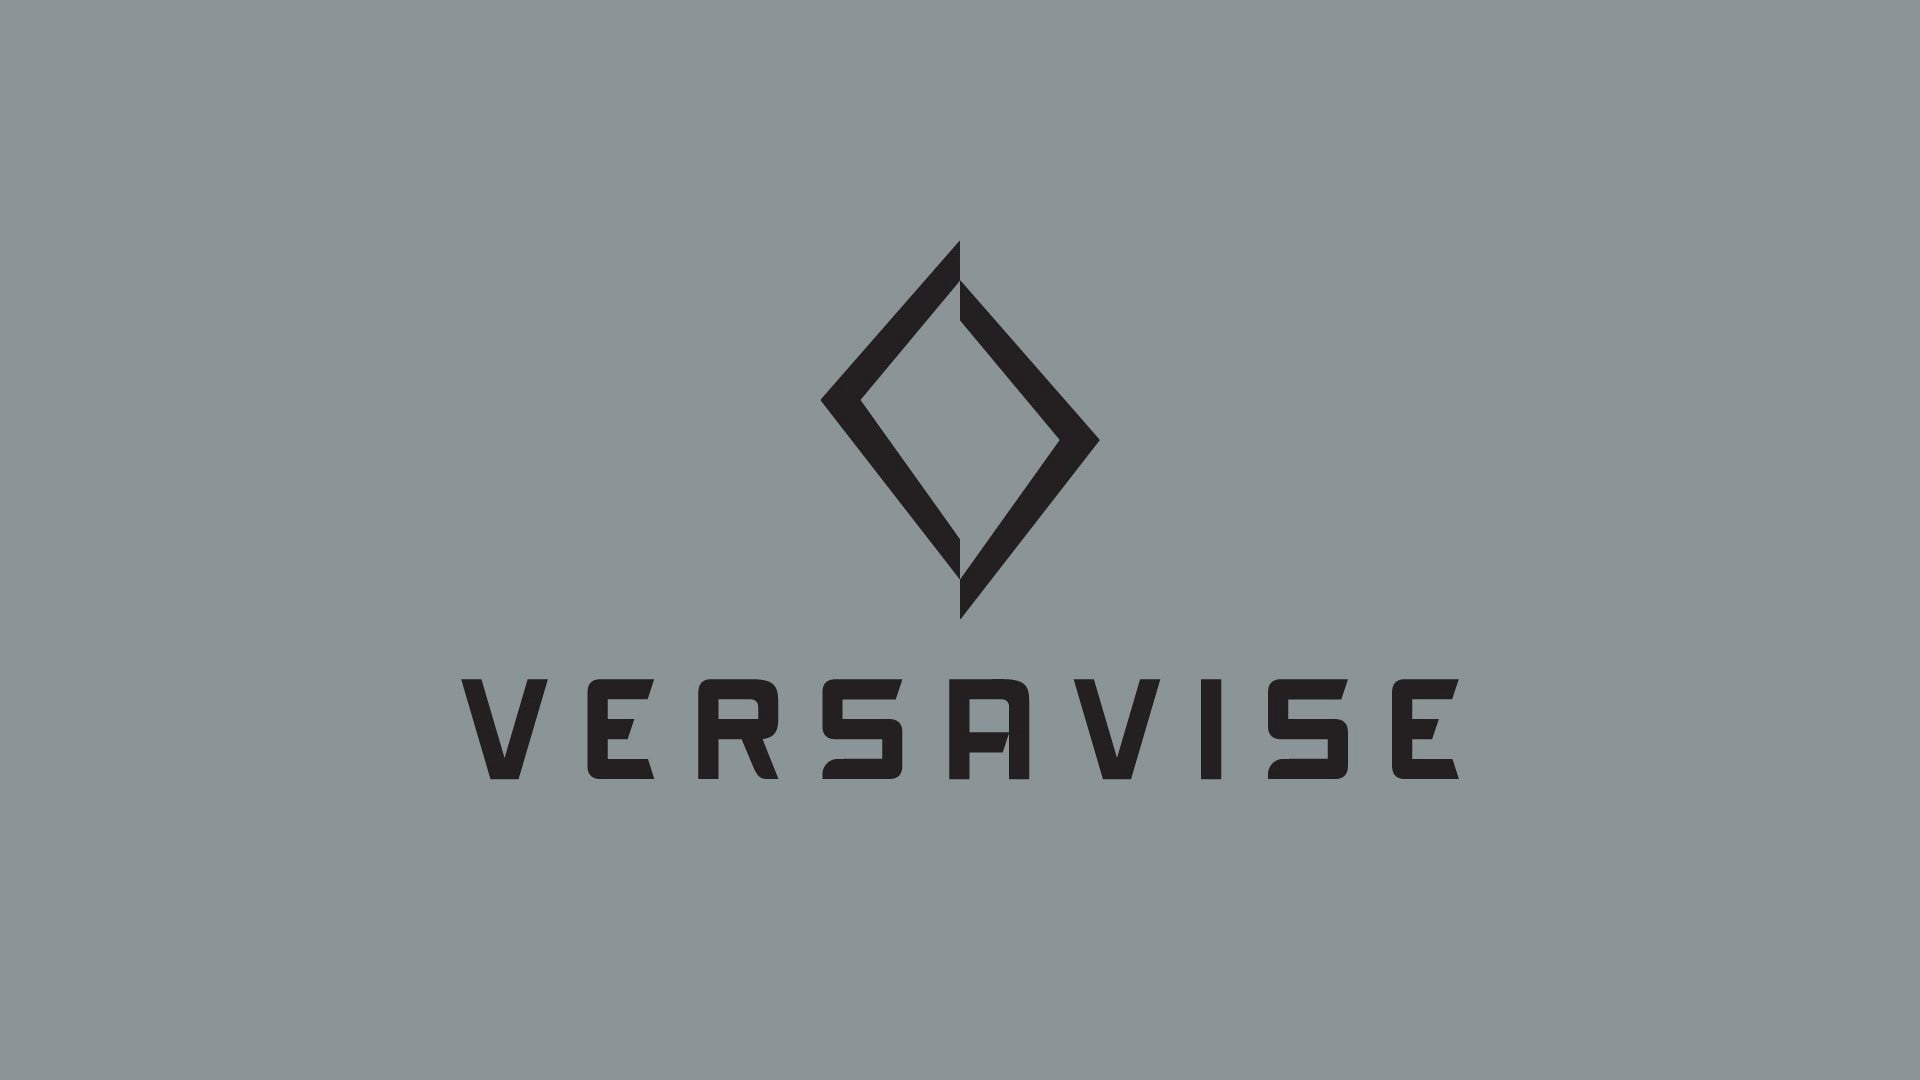 Versavise logo, simple, simple background, gray background, minimalism